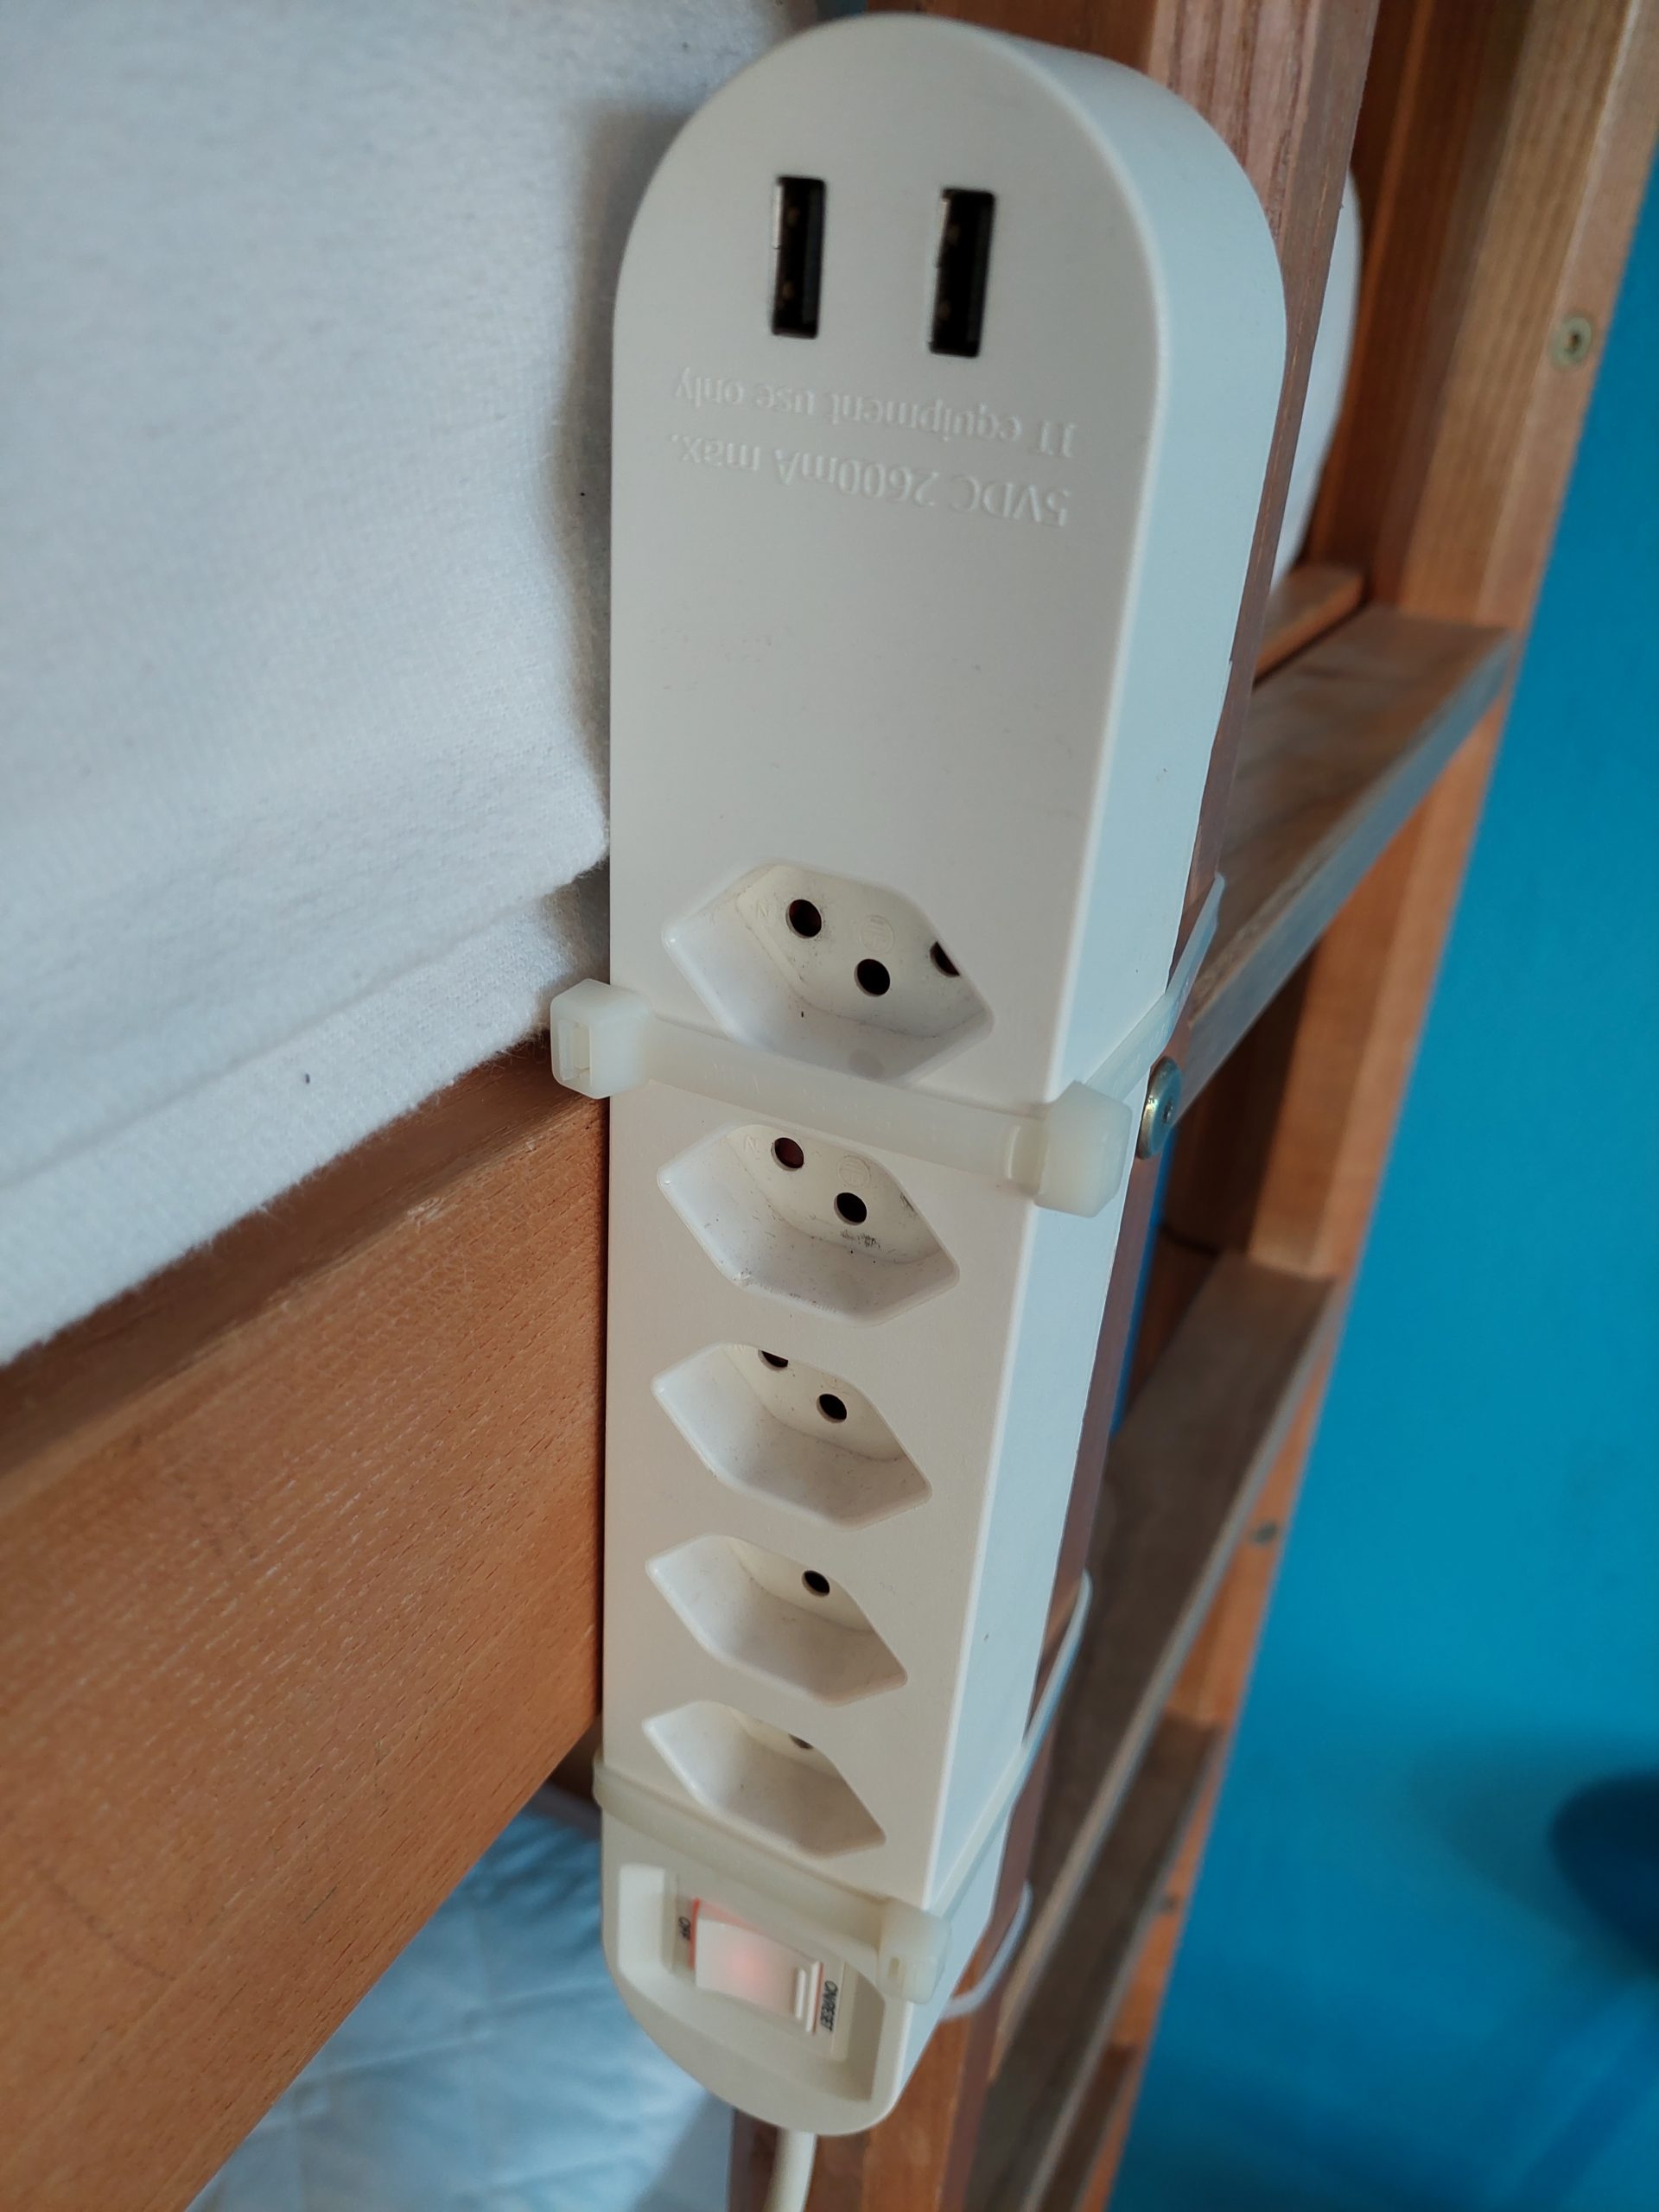 dormsbeds with multiplug (USB)